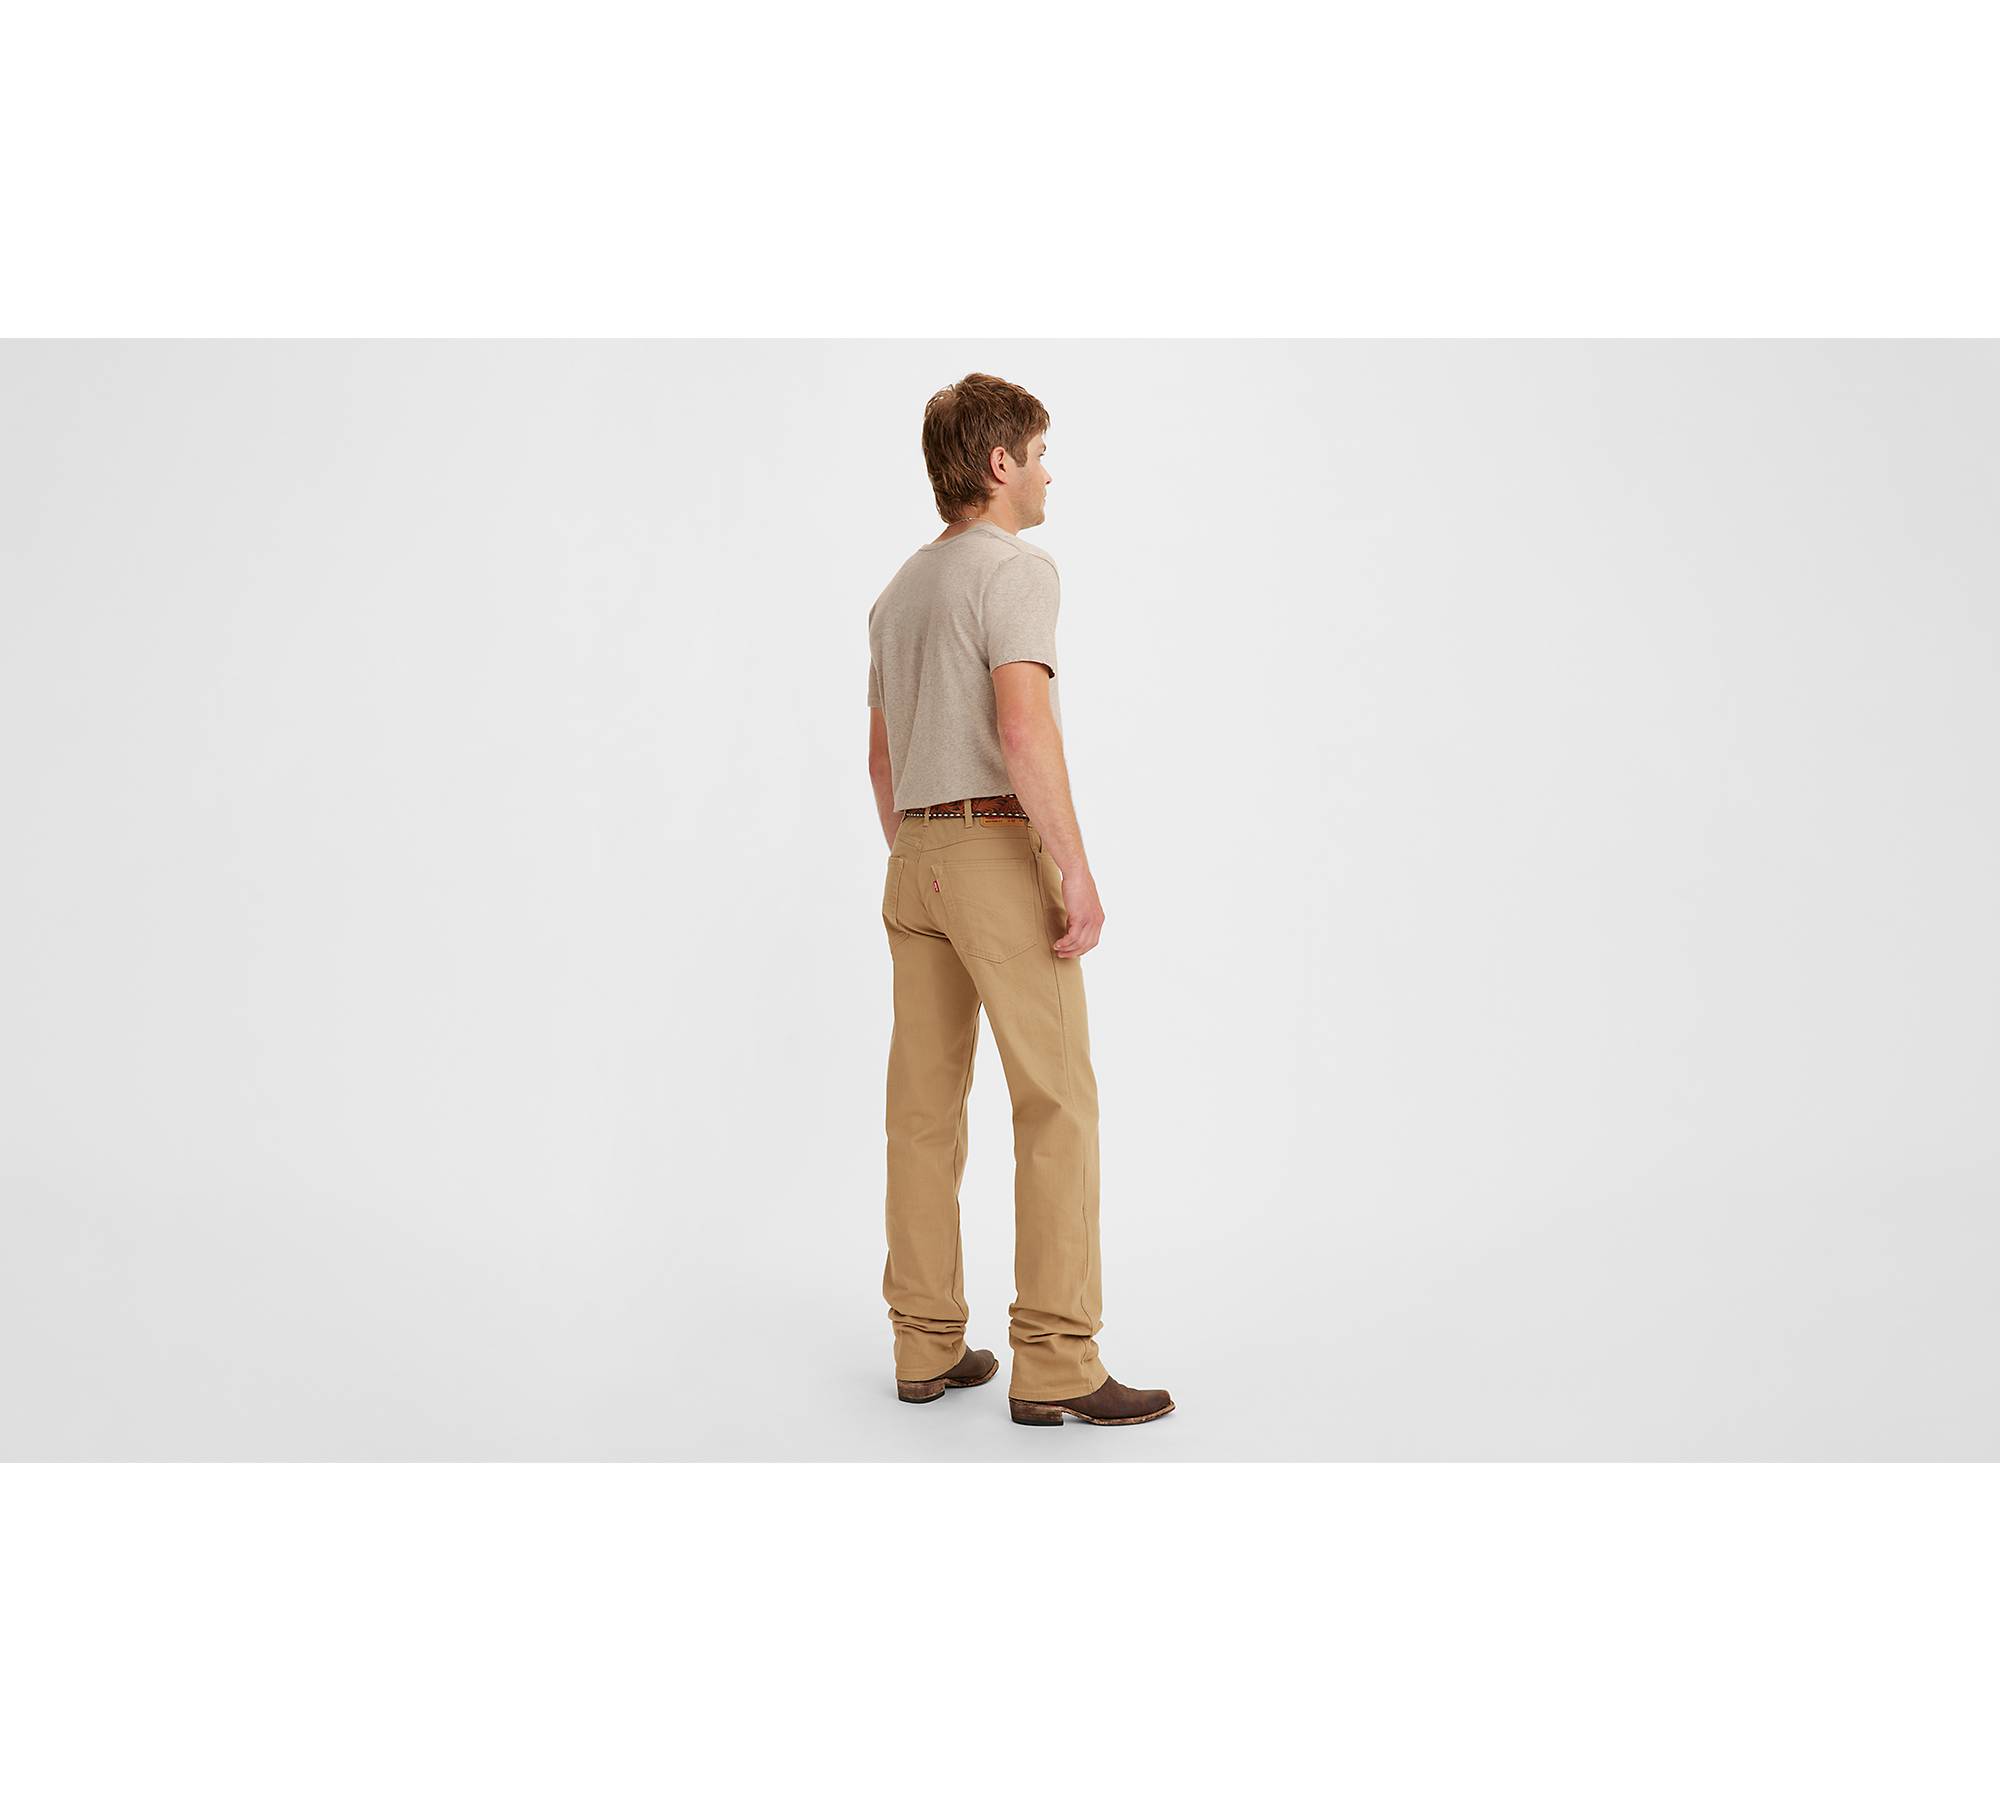 8 Men's Trousers/Pants NO belt loops ideas